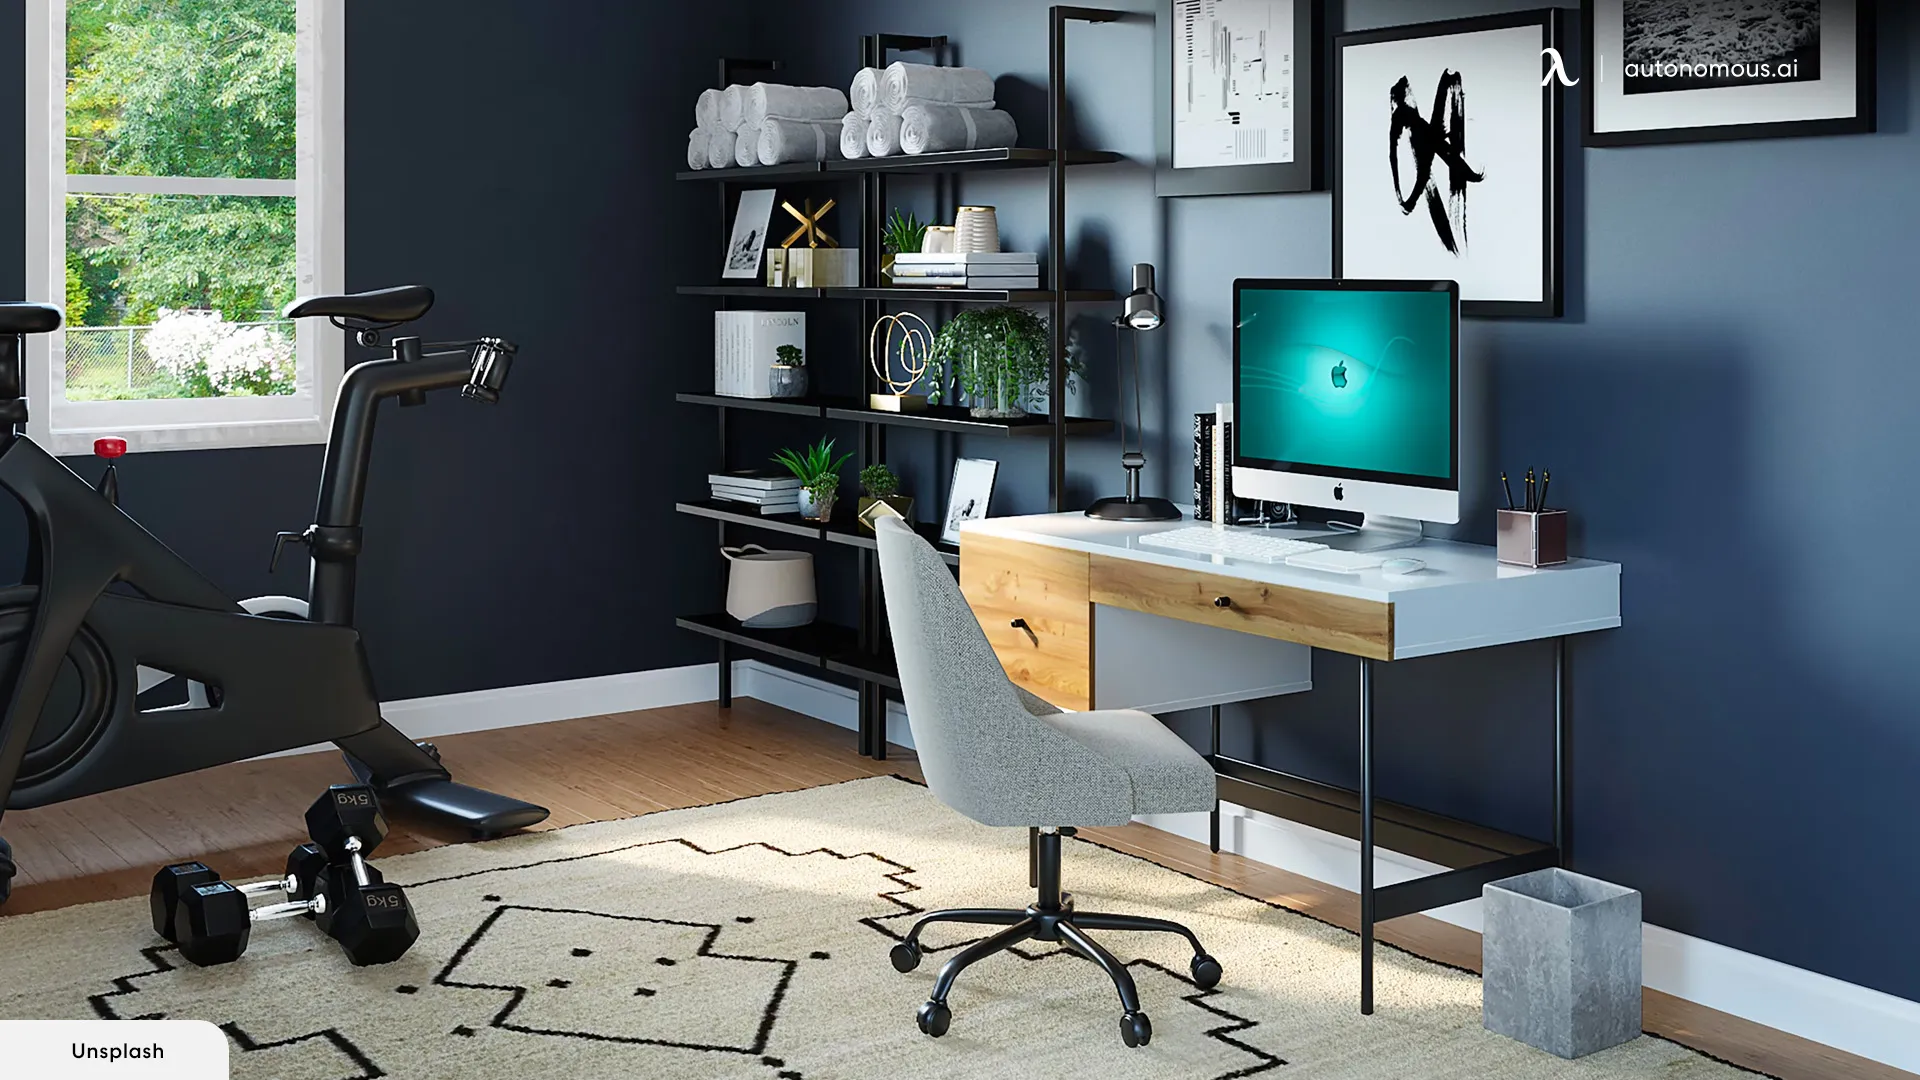 Incorporating Hobbies into Decor - home office decor